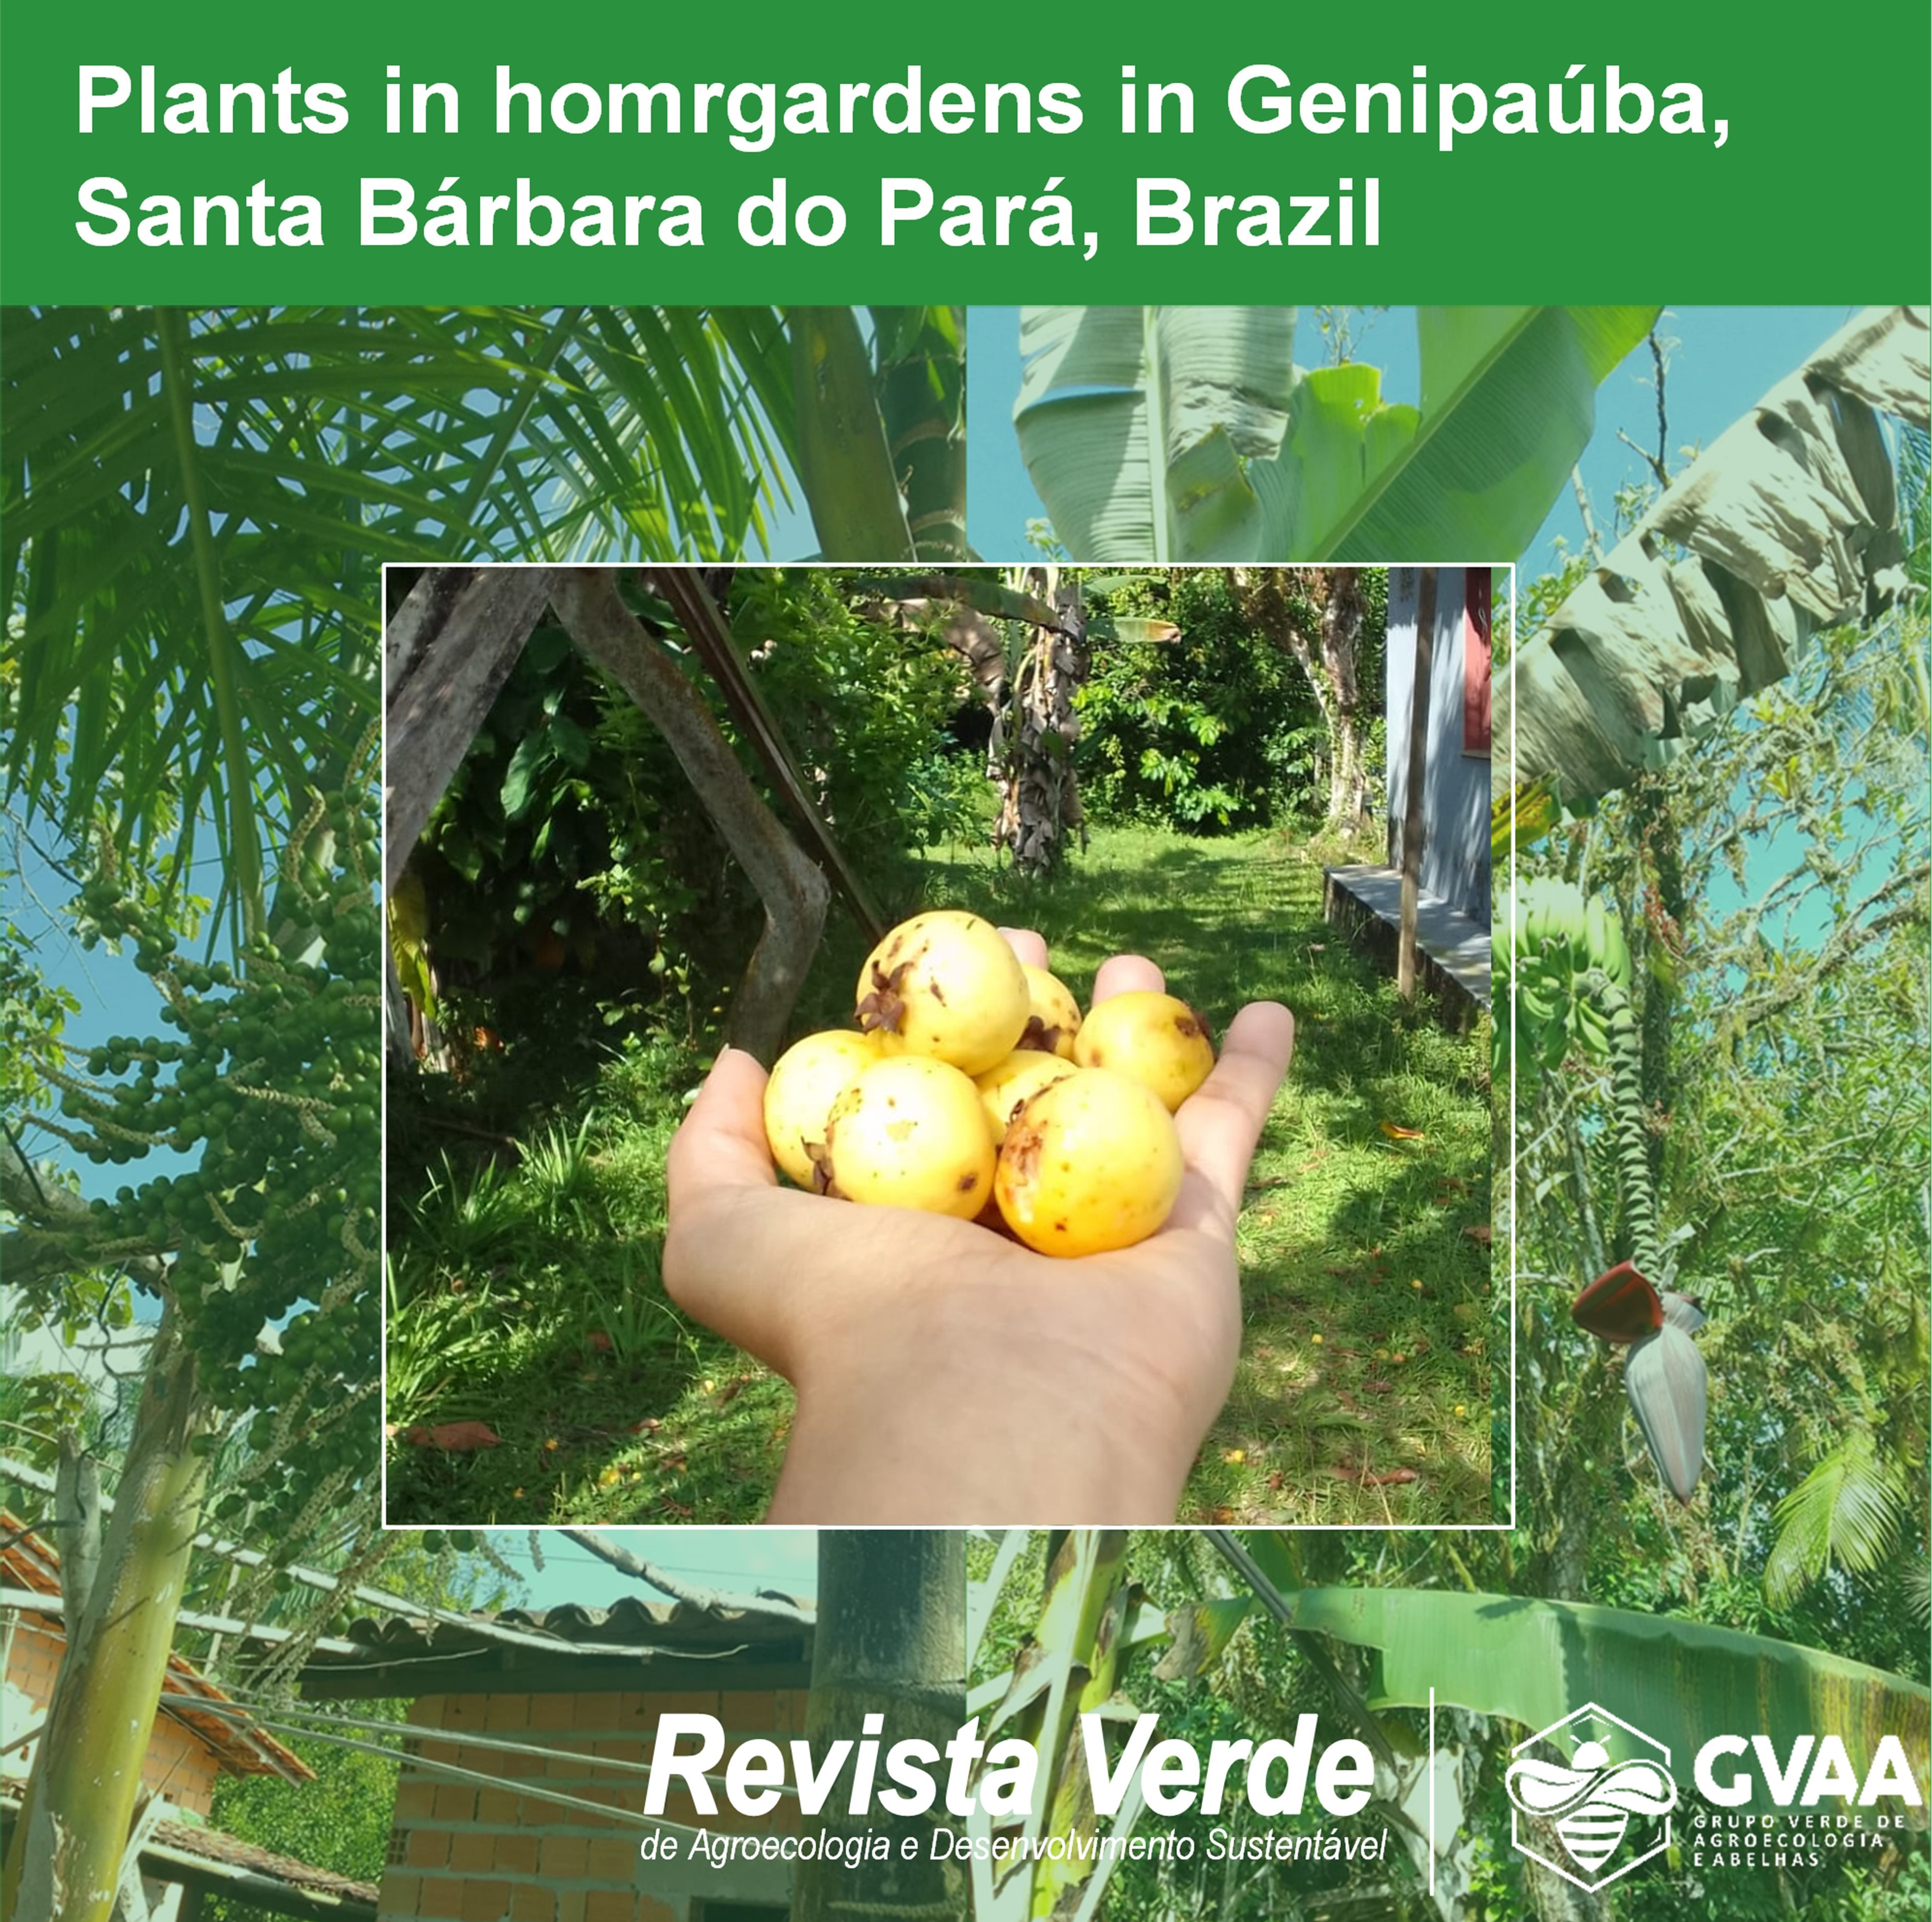 Composition and diversity of plants in homrgardens in the community of Genipaúba, Santa Bárbara do Pará, Brazil